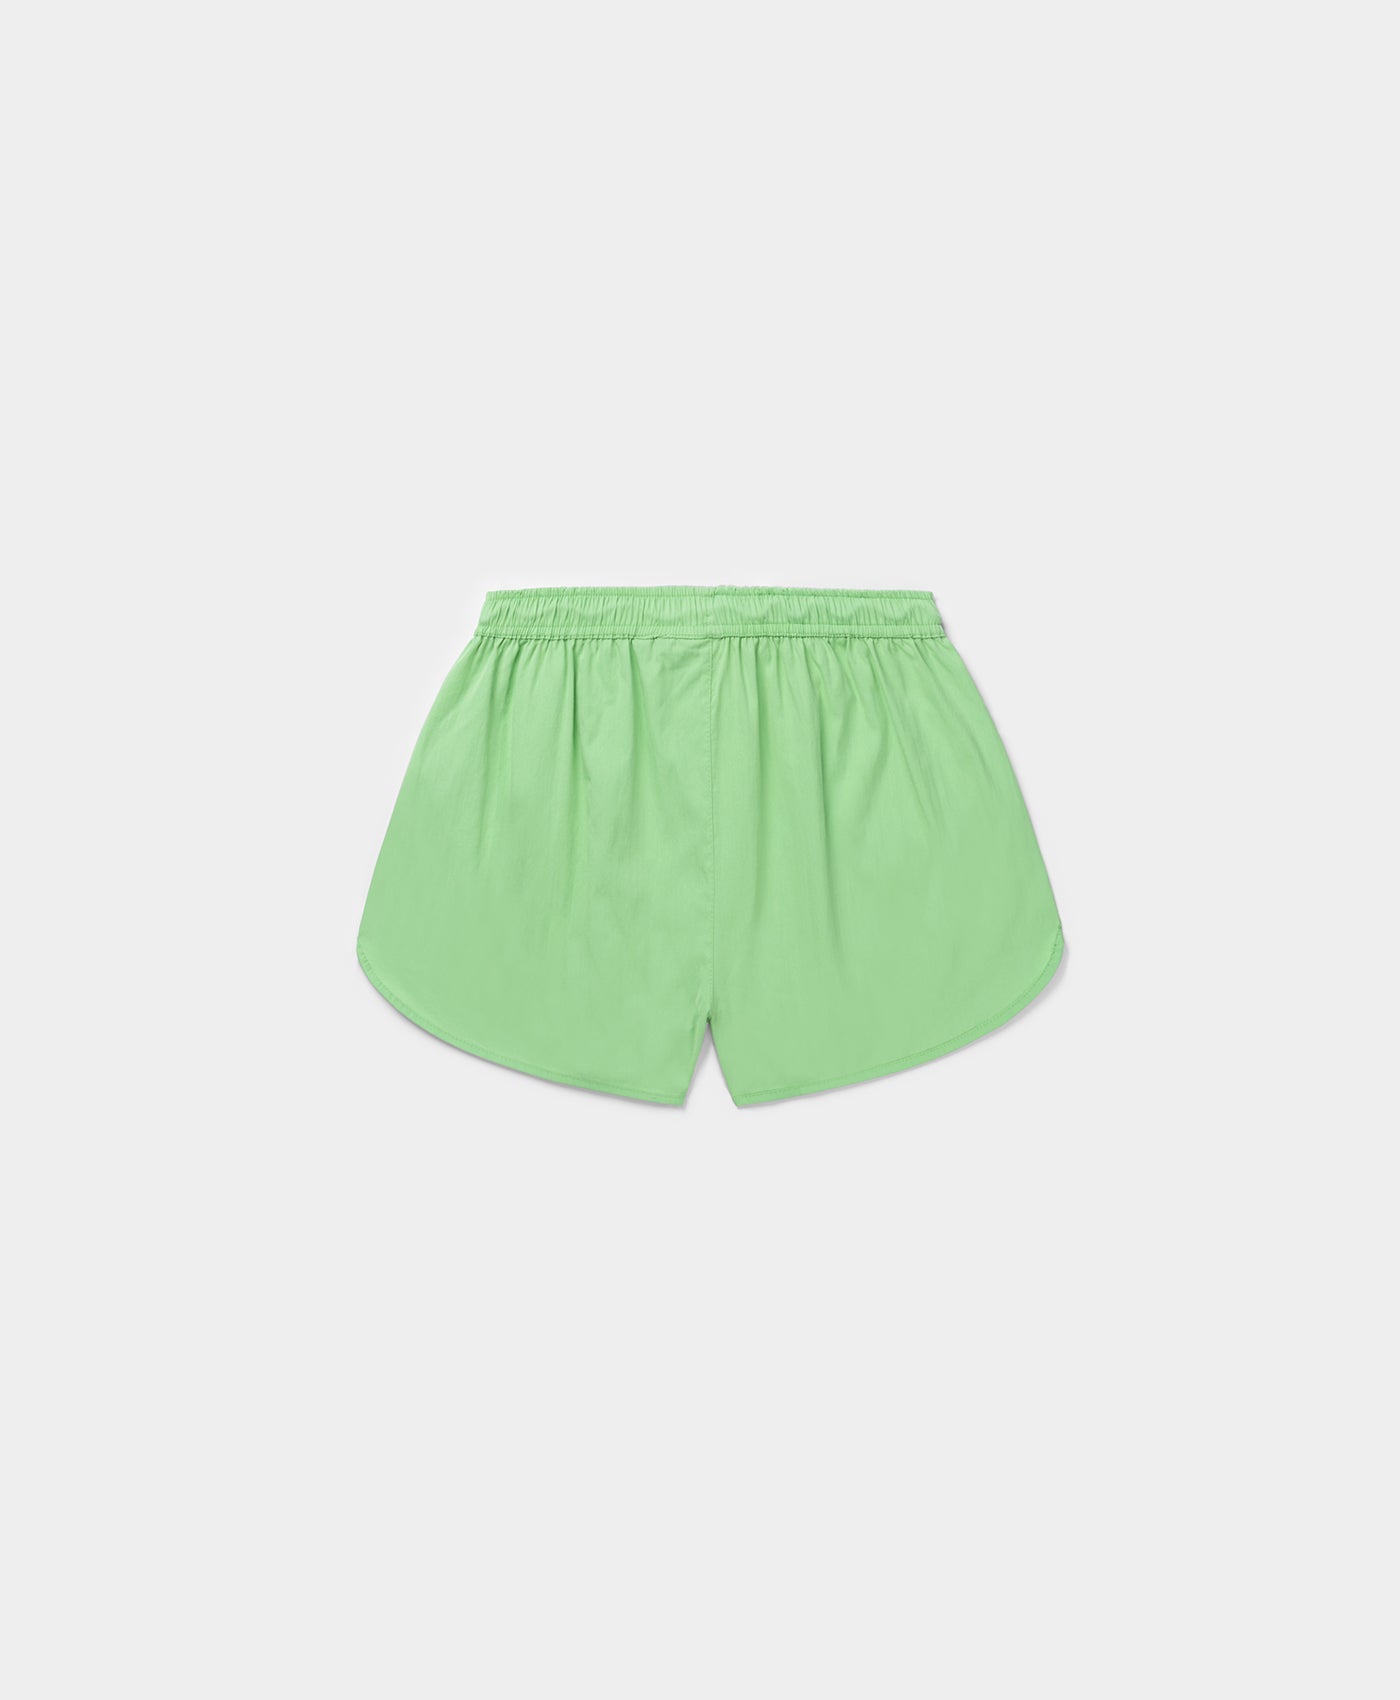 DP - Absinth Green Portia Shorts - Packshot - Rear